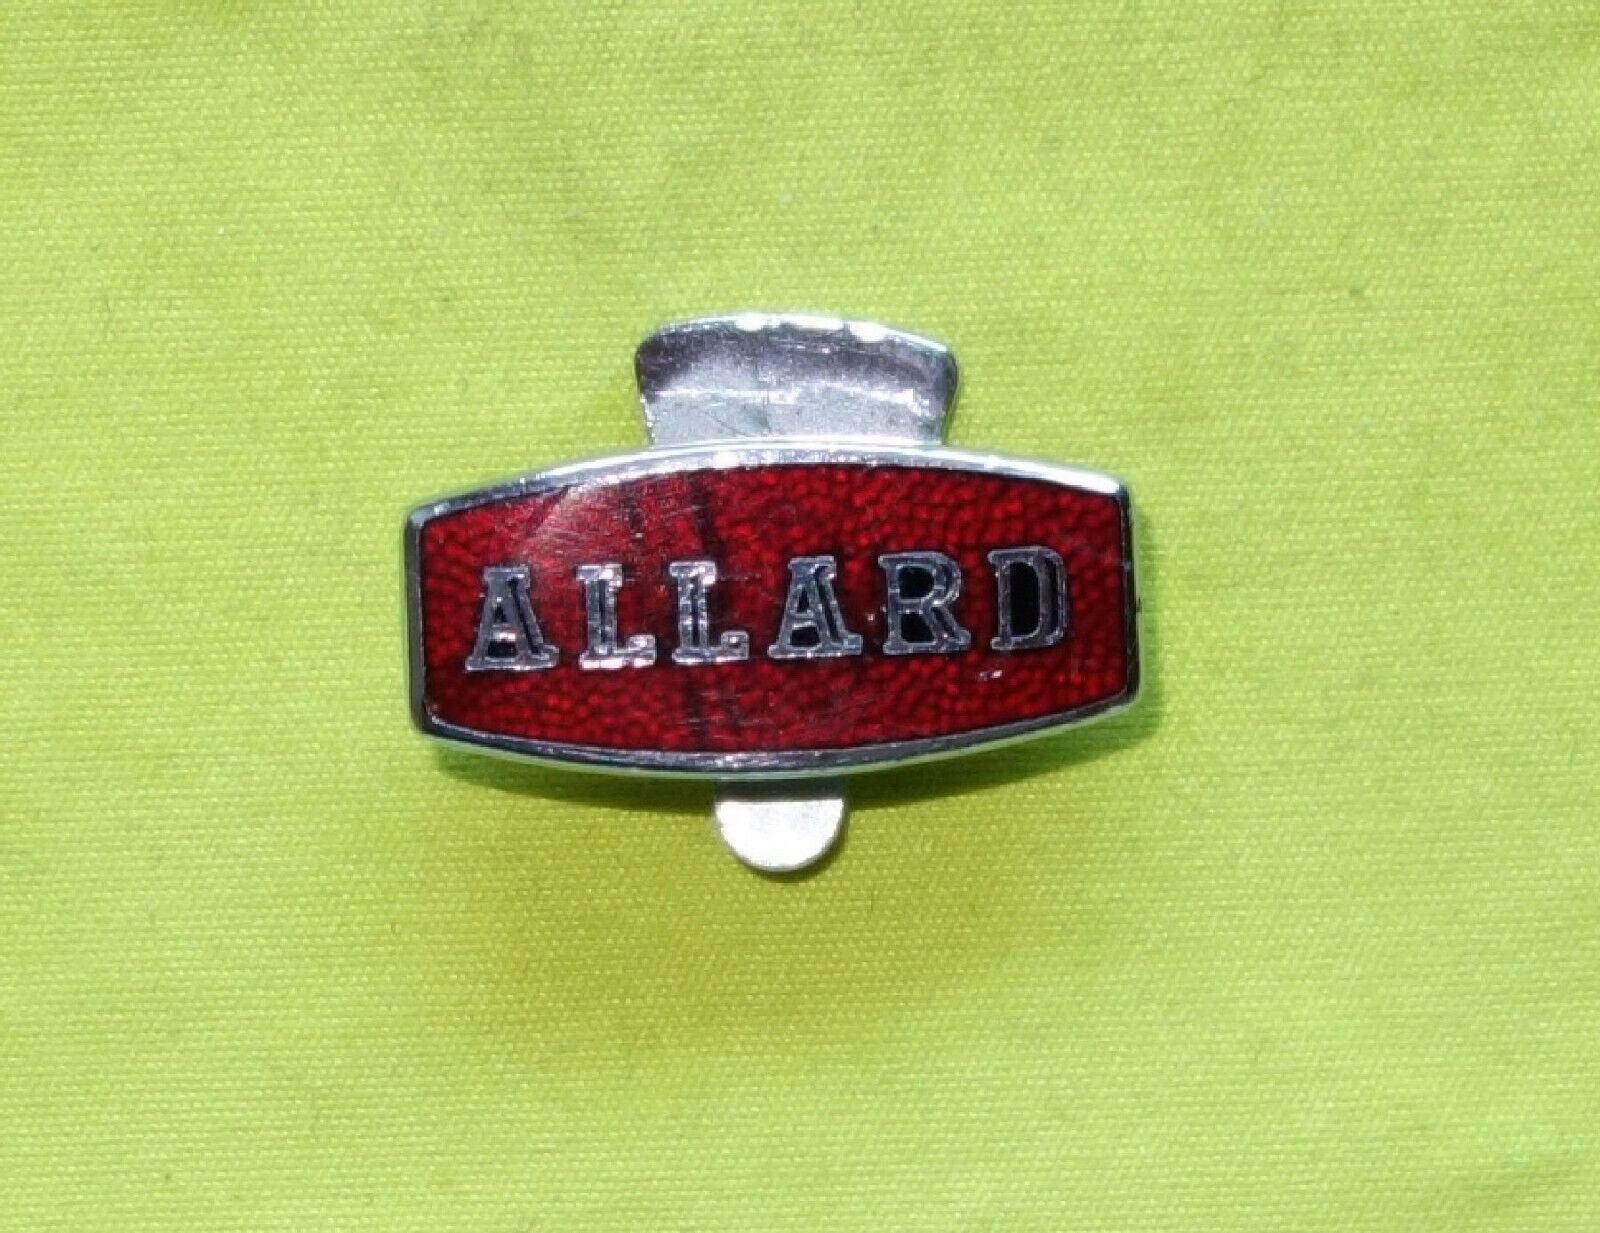 1960's ALLARD (British) enamel badge pin lapel car automobile a Super tania produkcja krajowa